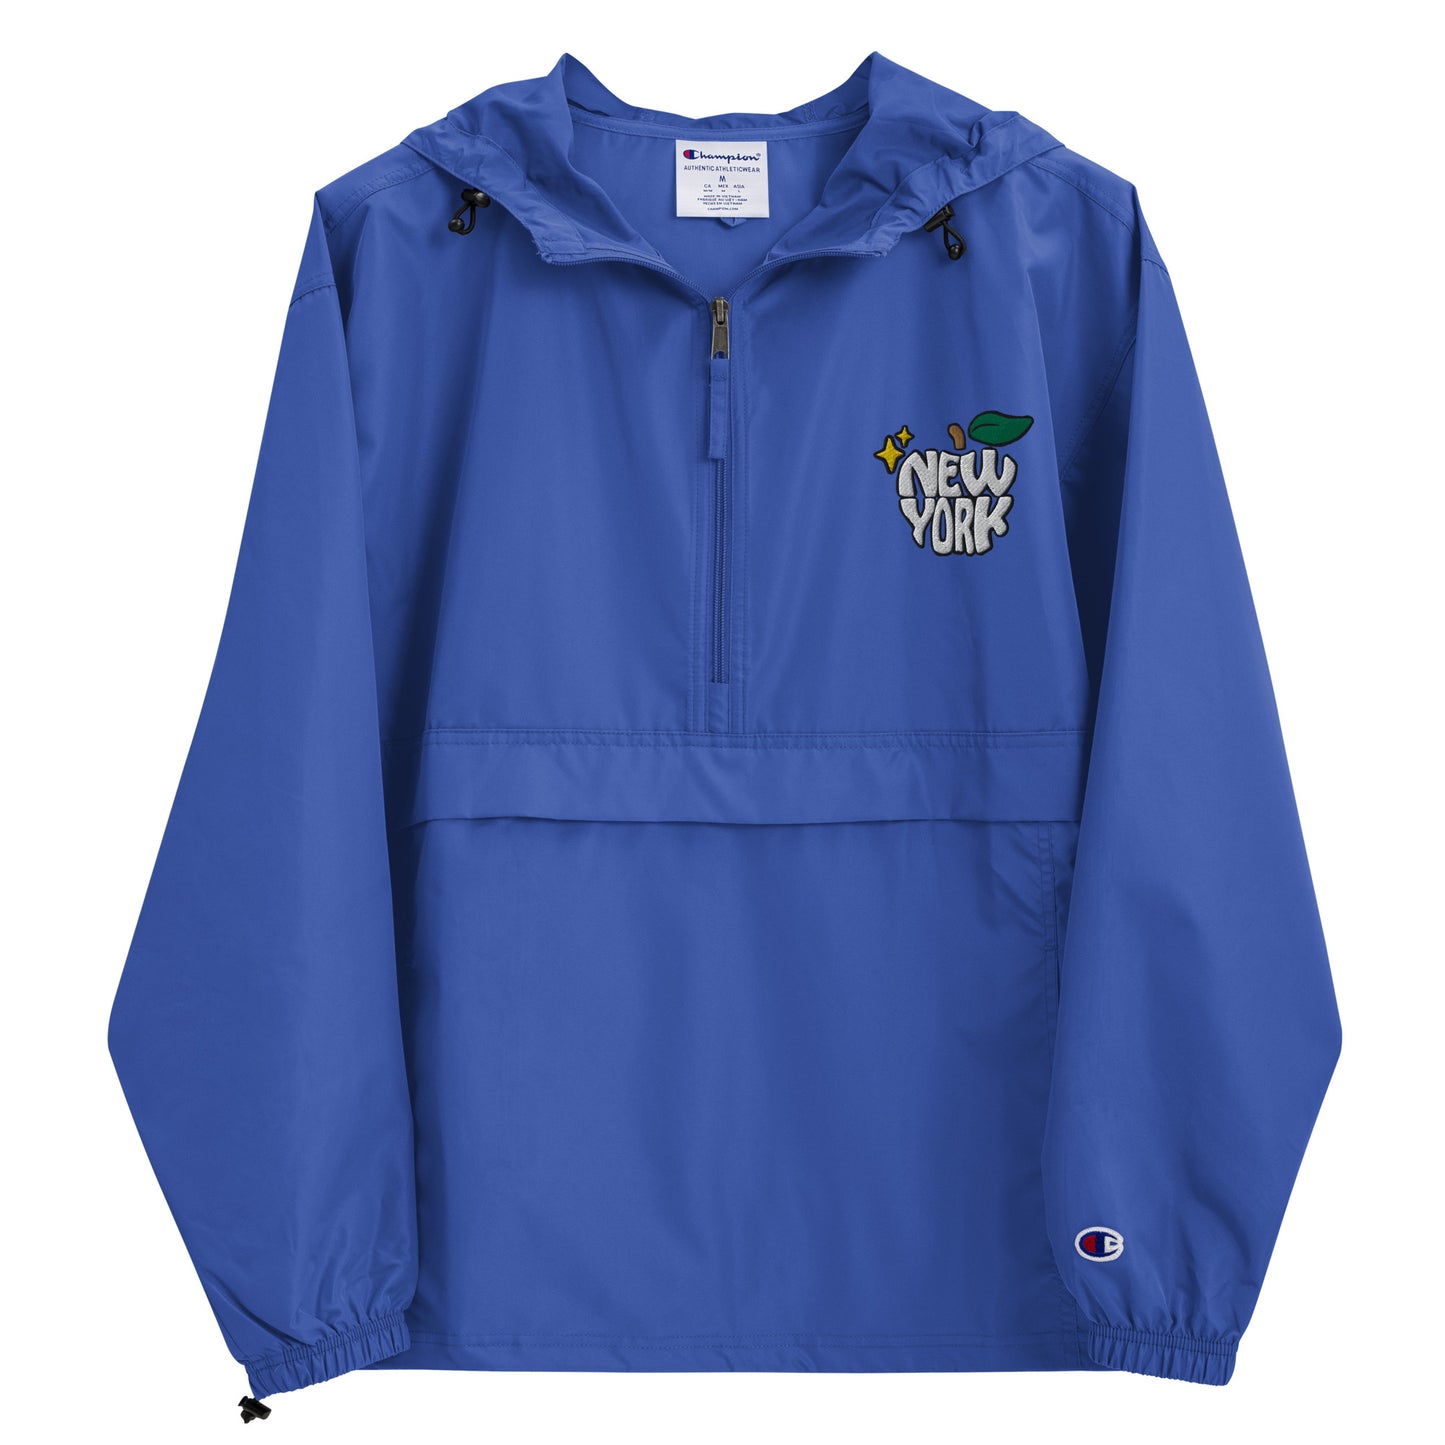 New York Apple Logo Embroidered Royal Blue Champion Packable Windbreaker Jacket Scattered Streetwear